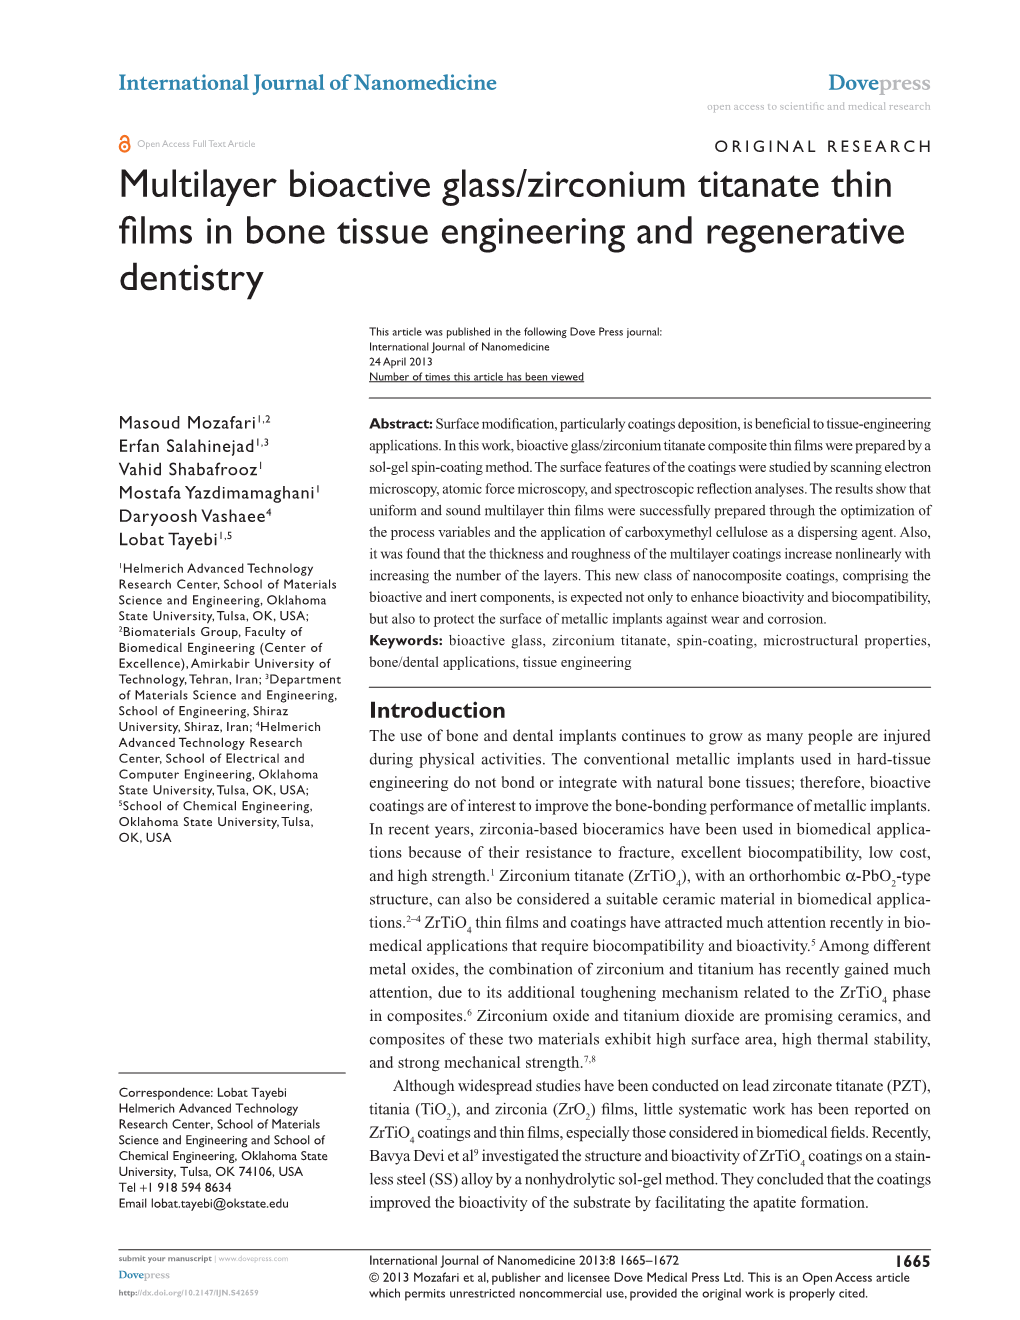 Multilayer Bioactive Glass/Zirconium Titanate Thin Films in Bone Tissue Engineering and Regenerative Dentistry